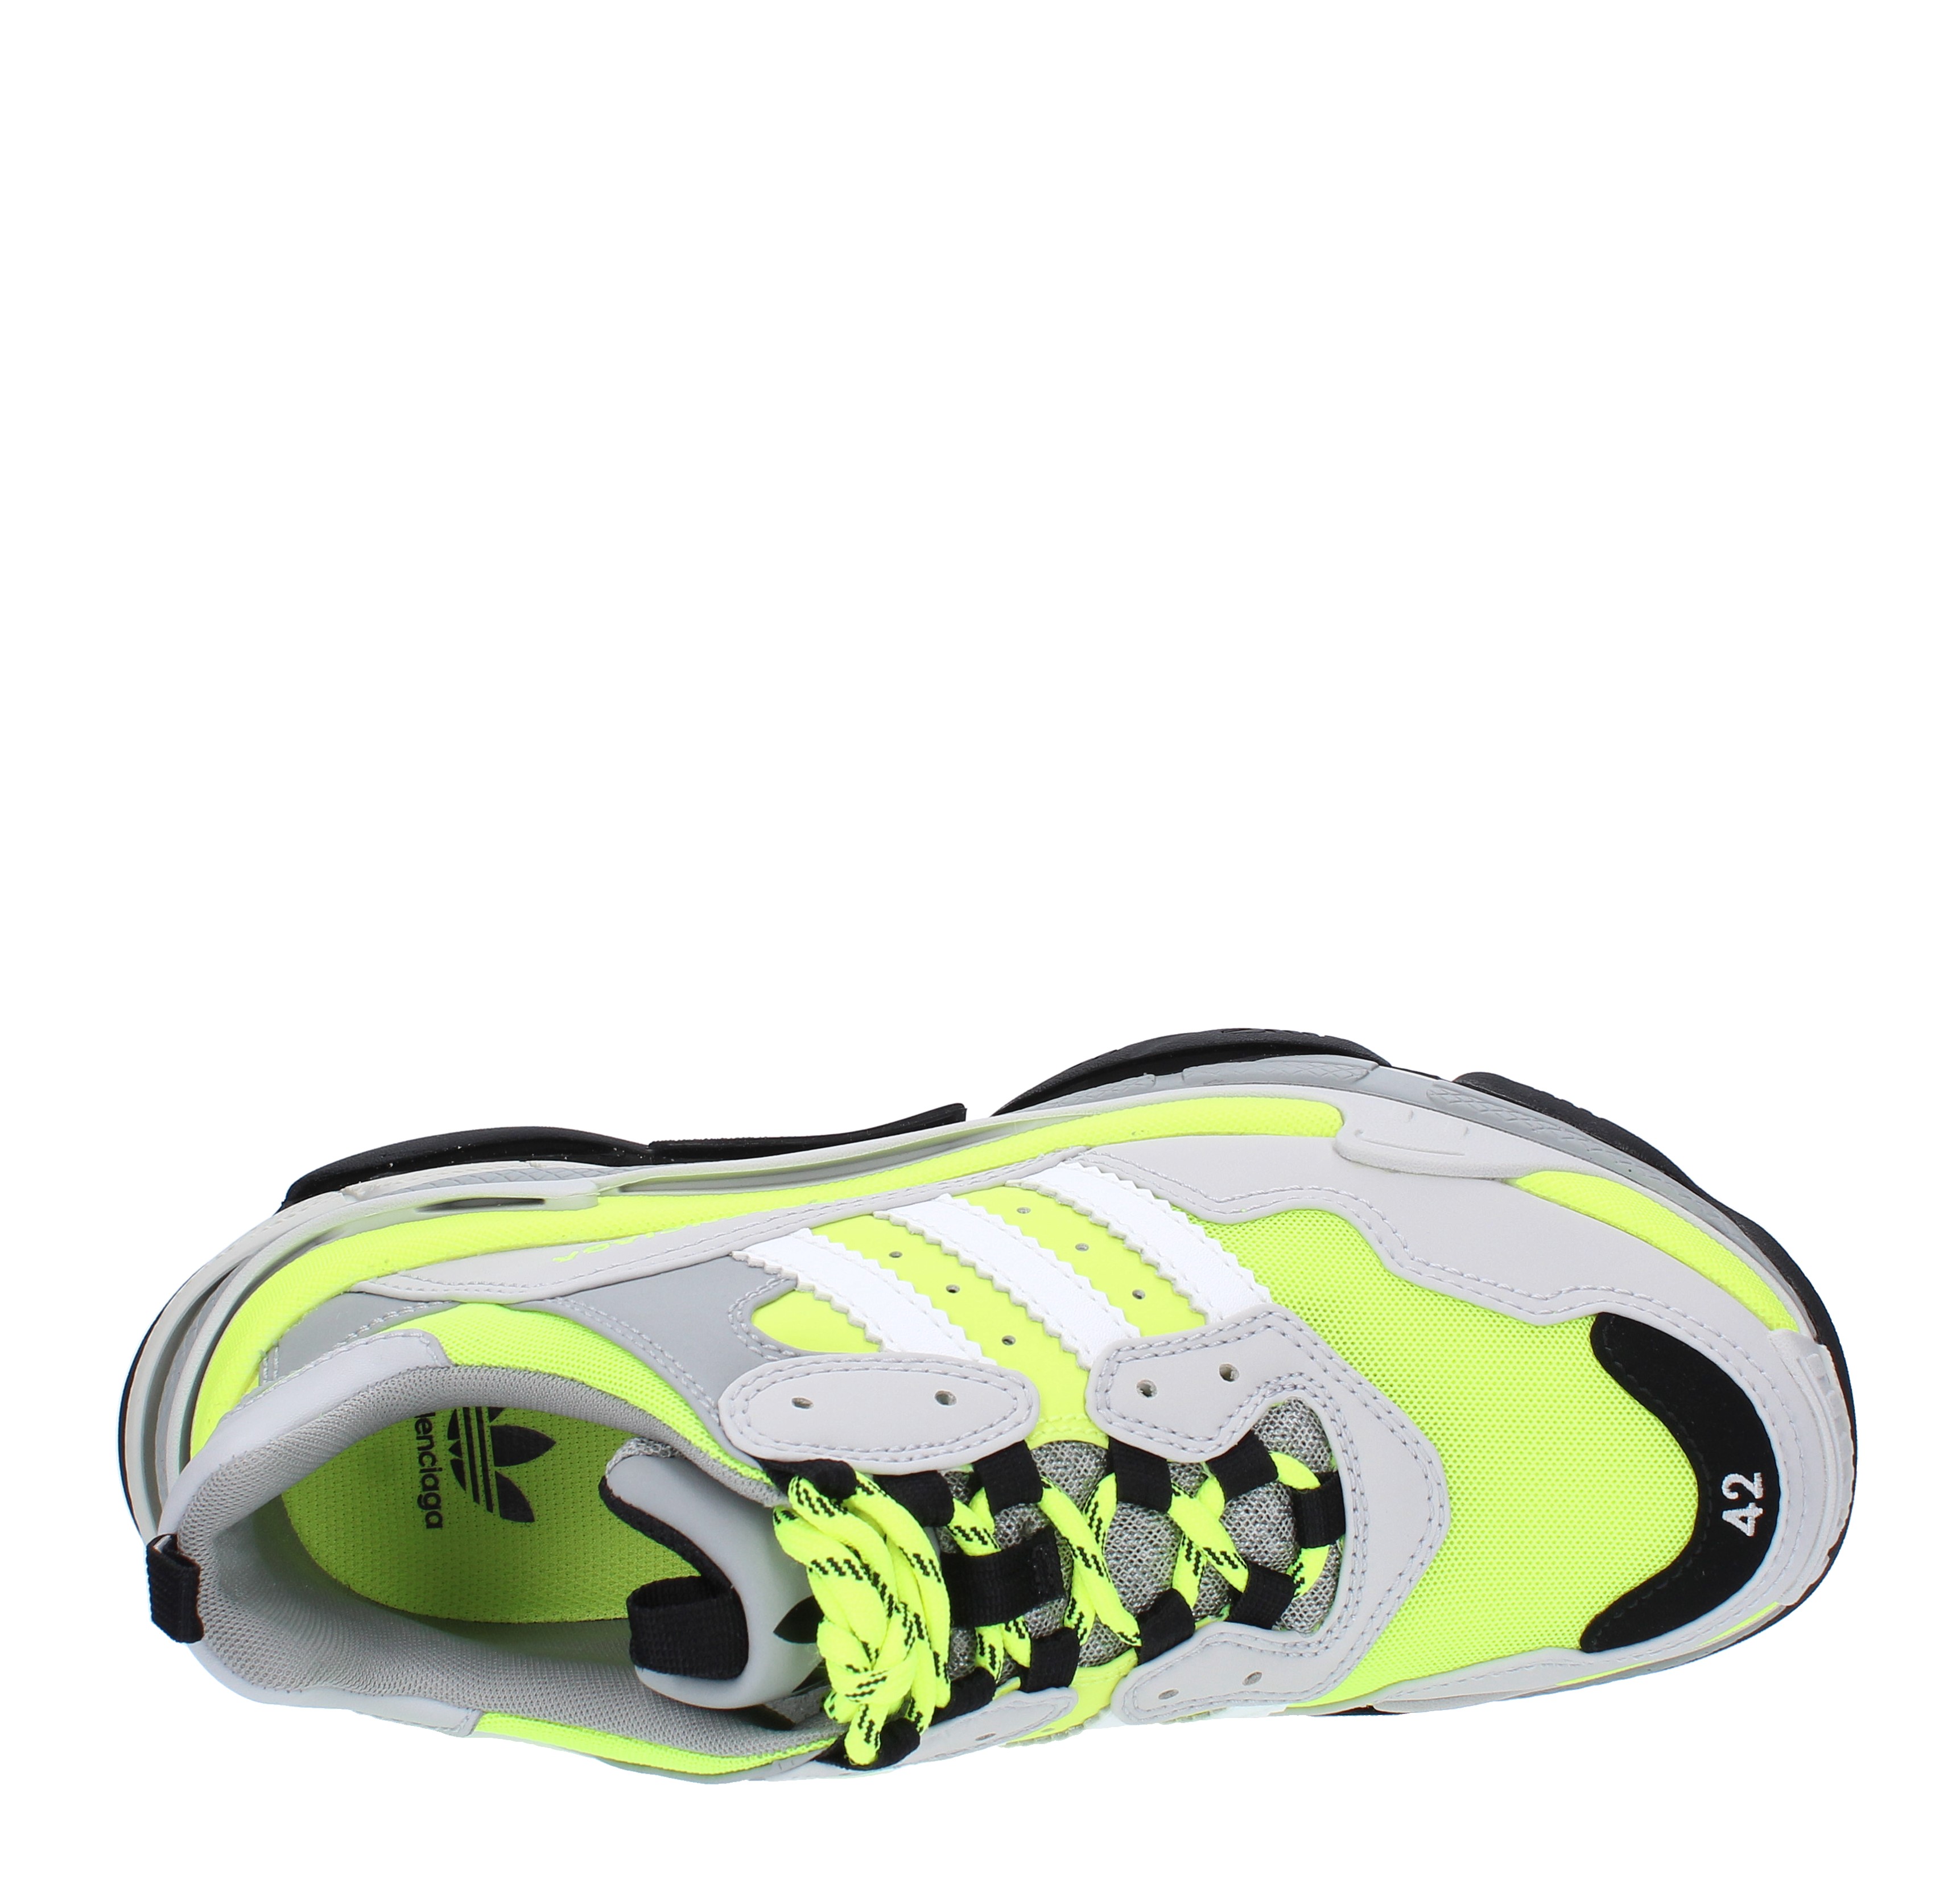 Sneakers BALENCIAGA X ADIDAS TRIPLE S in doppia schiuma e mesh giallo neon,  nero e grigio - BALENCIAGA X ADIDAS - Ginevra calzature